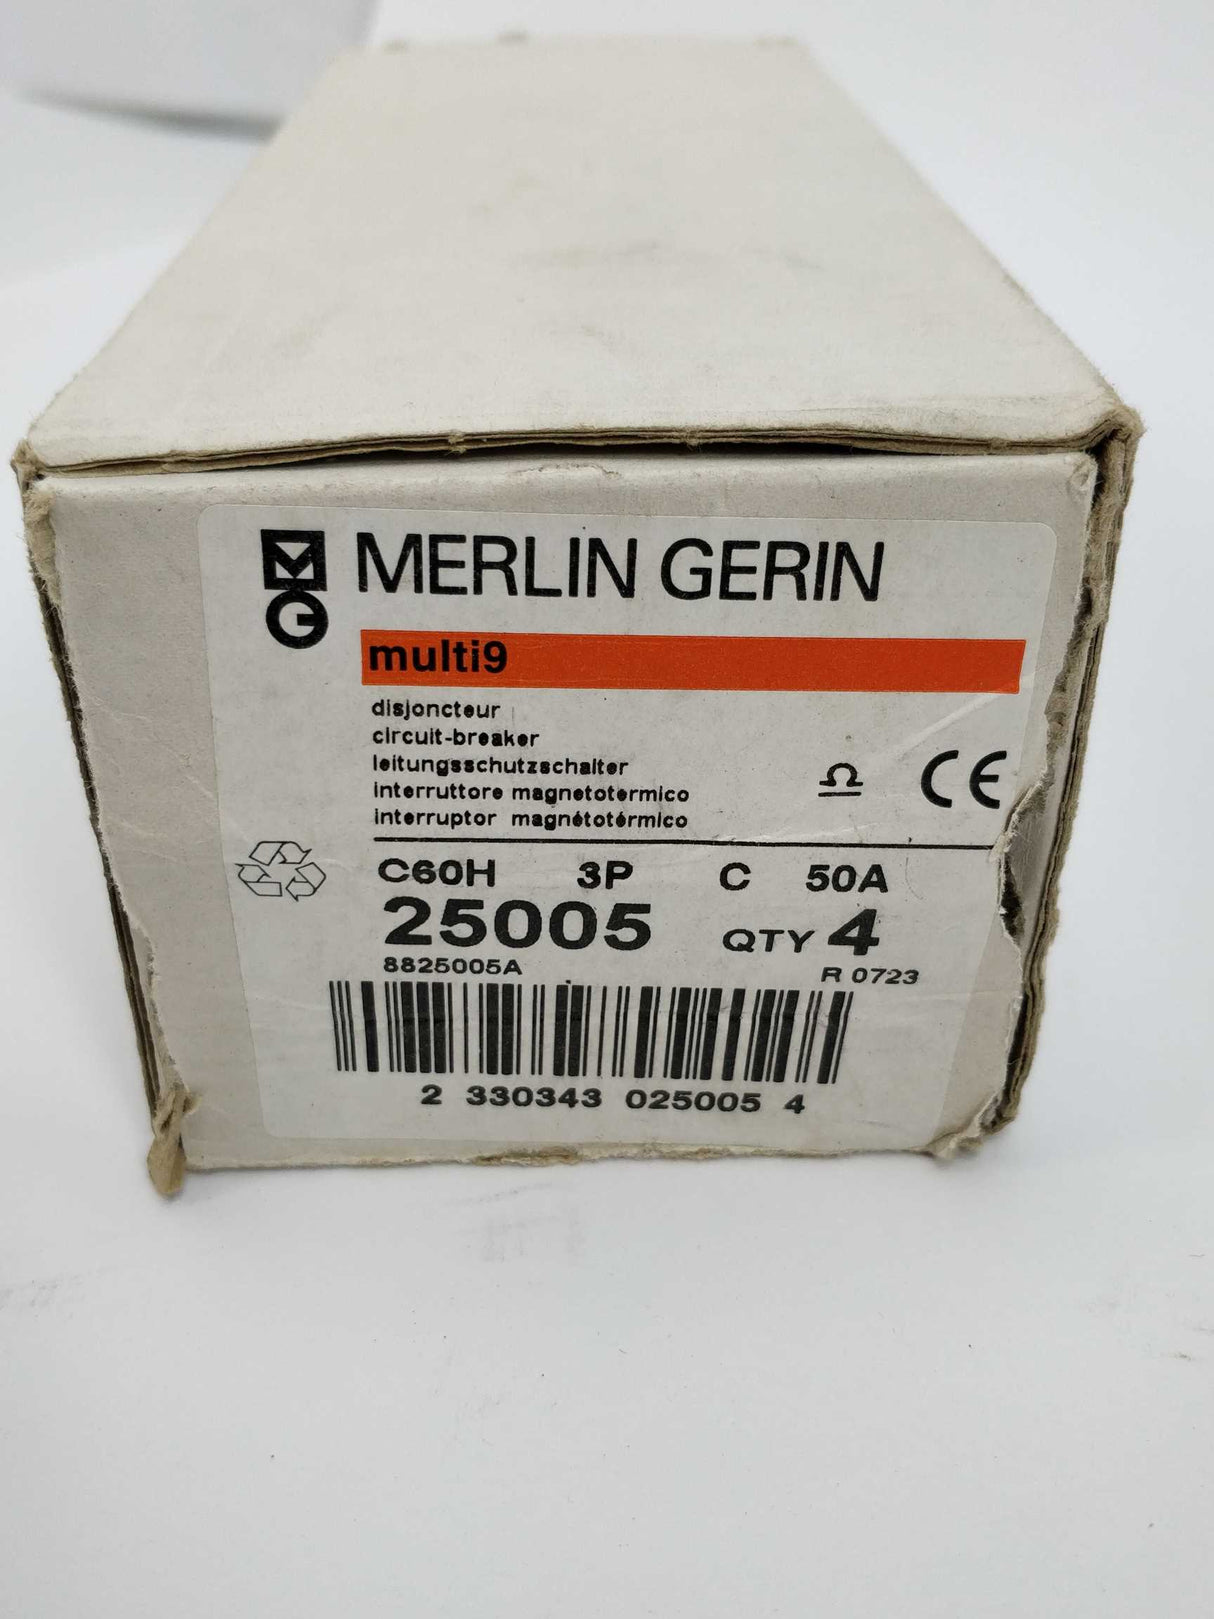 Merlin Gerin C60H 3P C 50A multi9 25005 circuit breaker